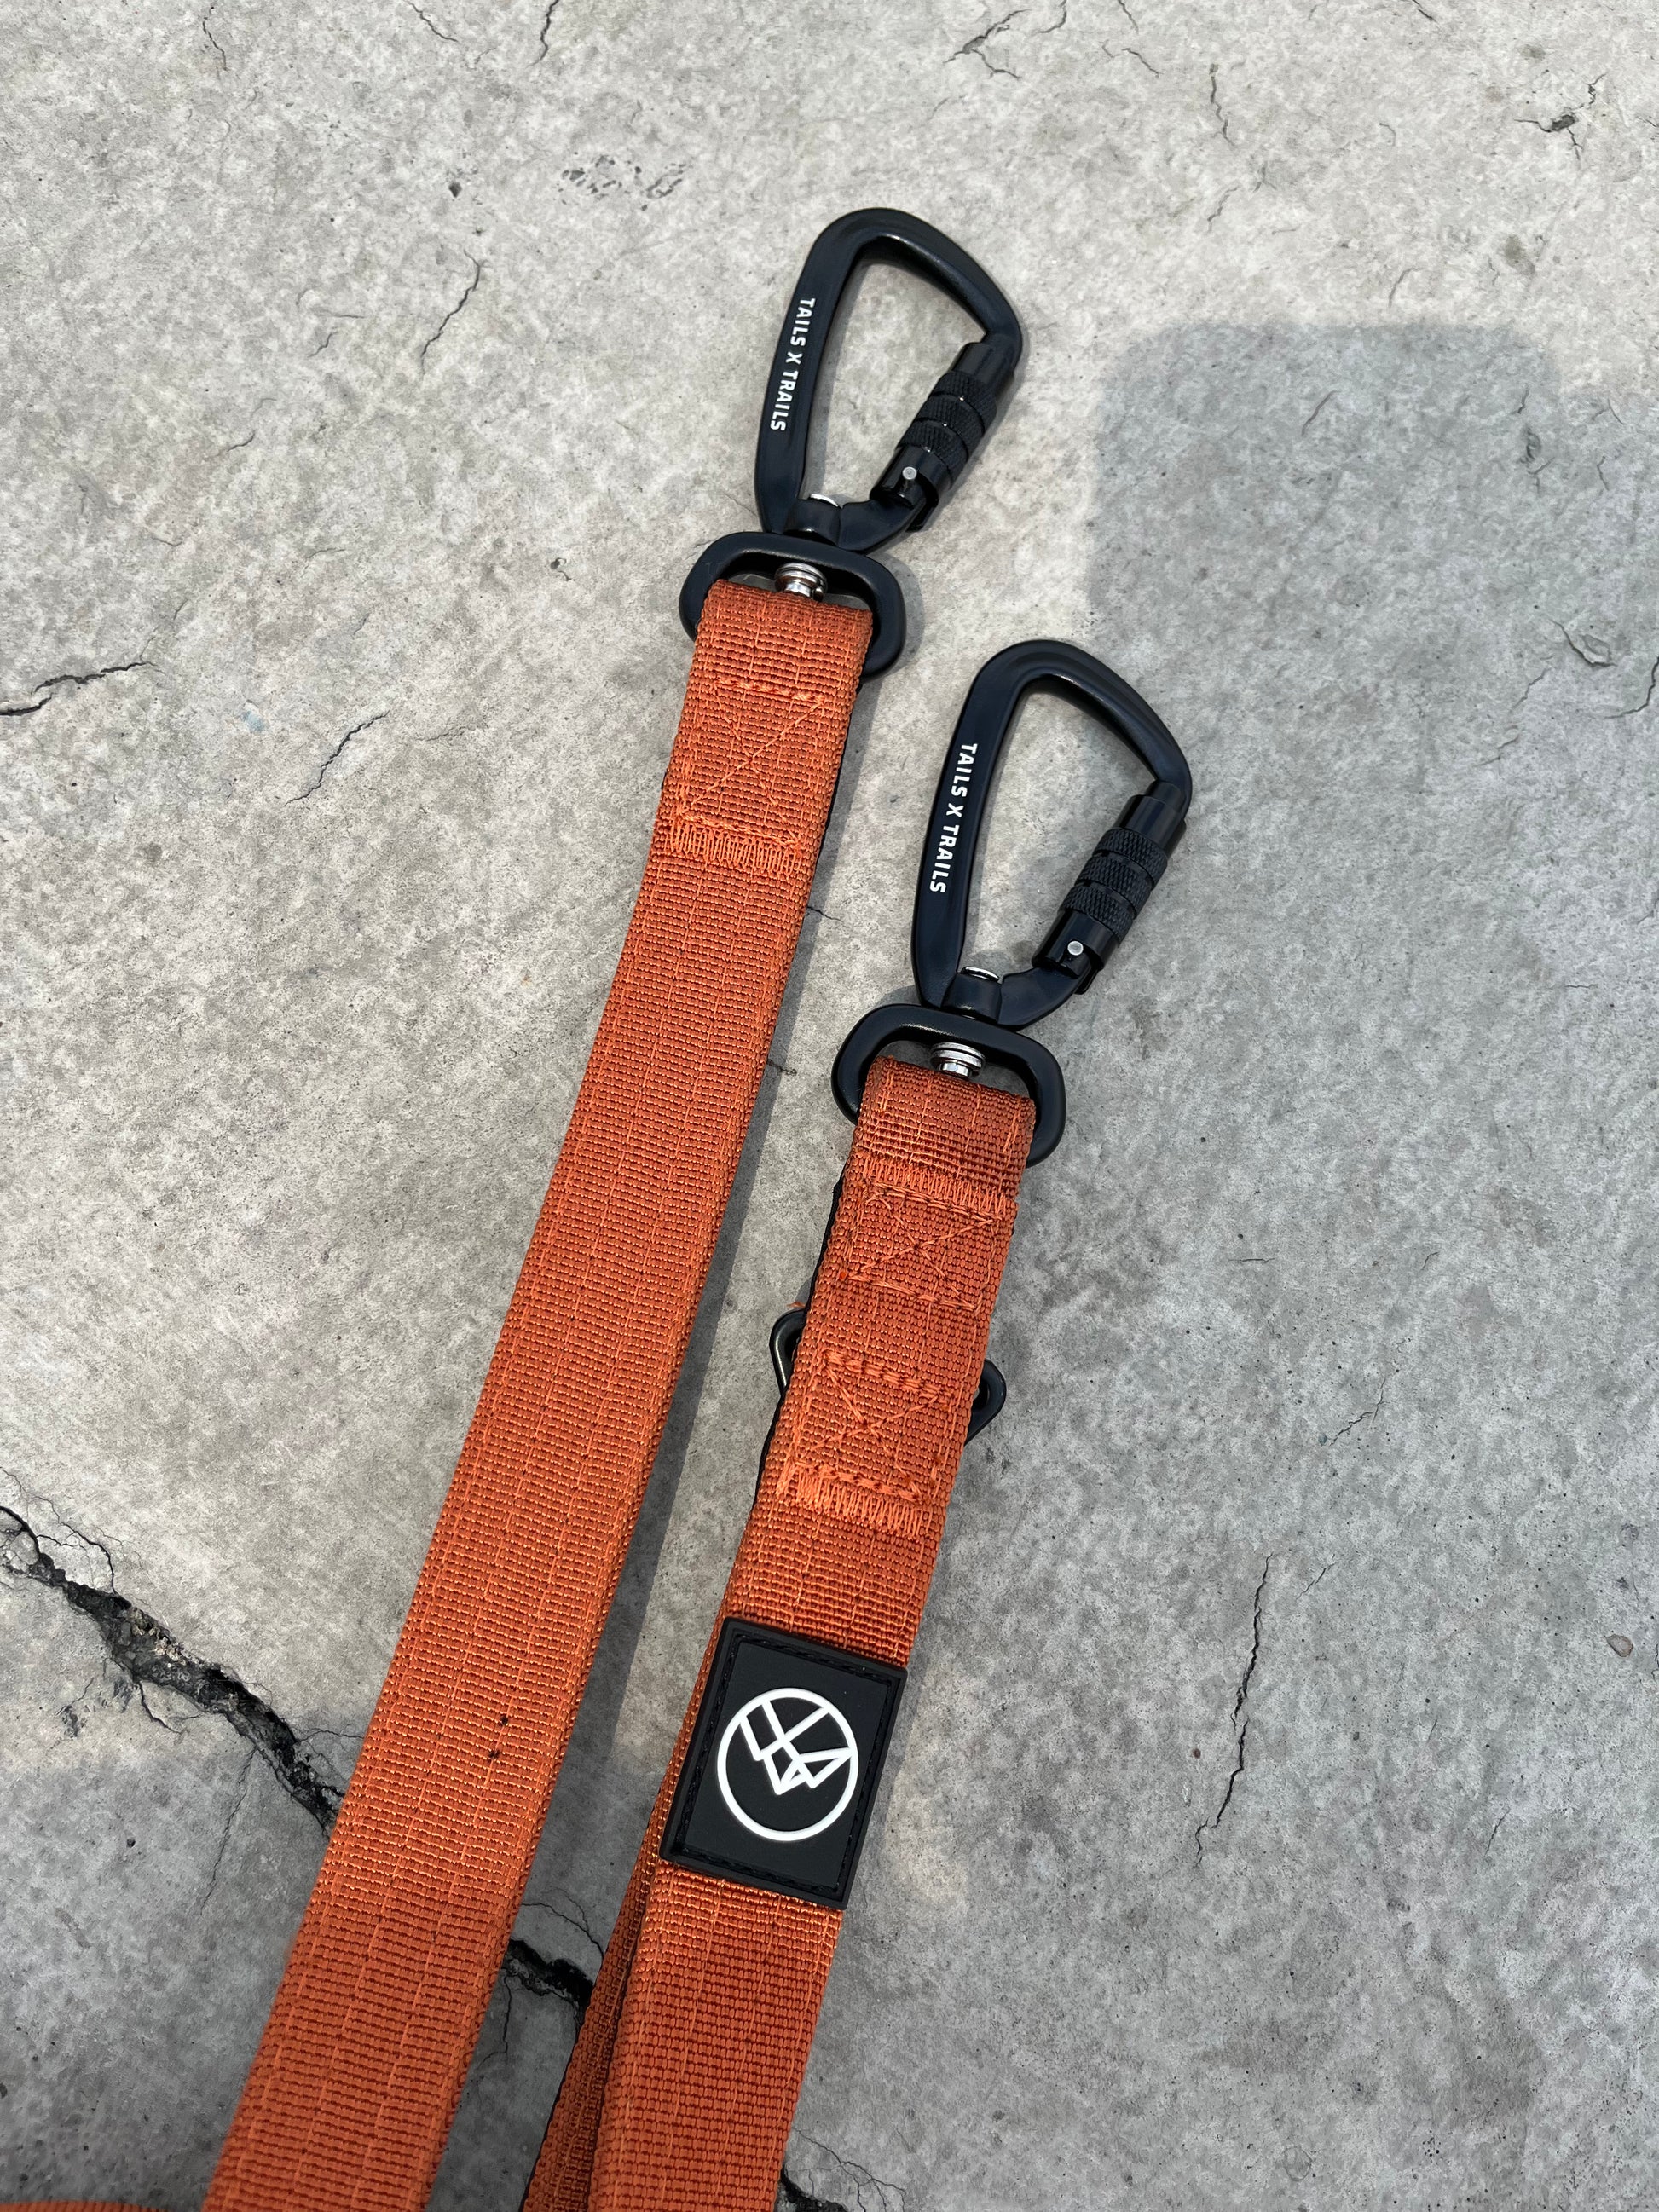 dog leash orange carabiner clip heavy duty